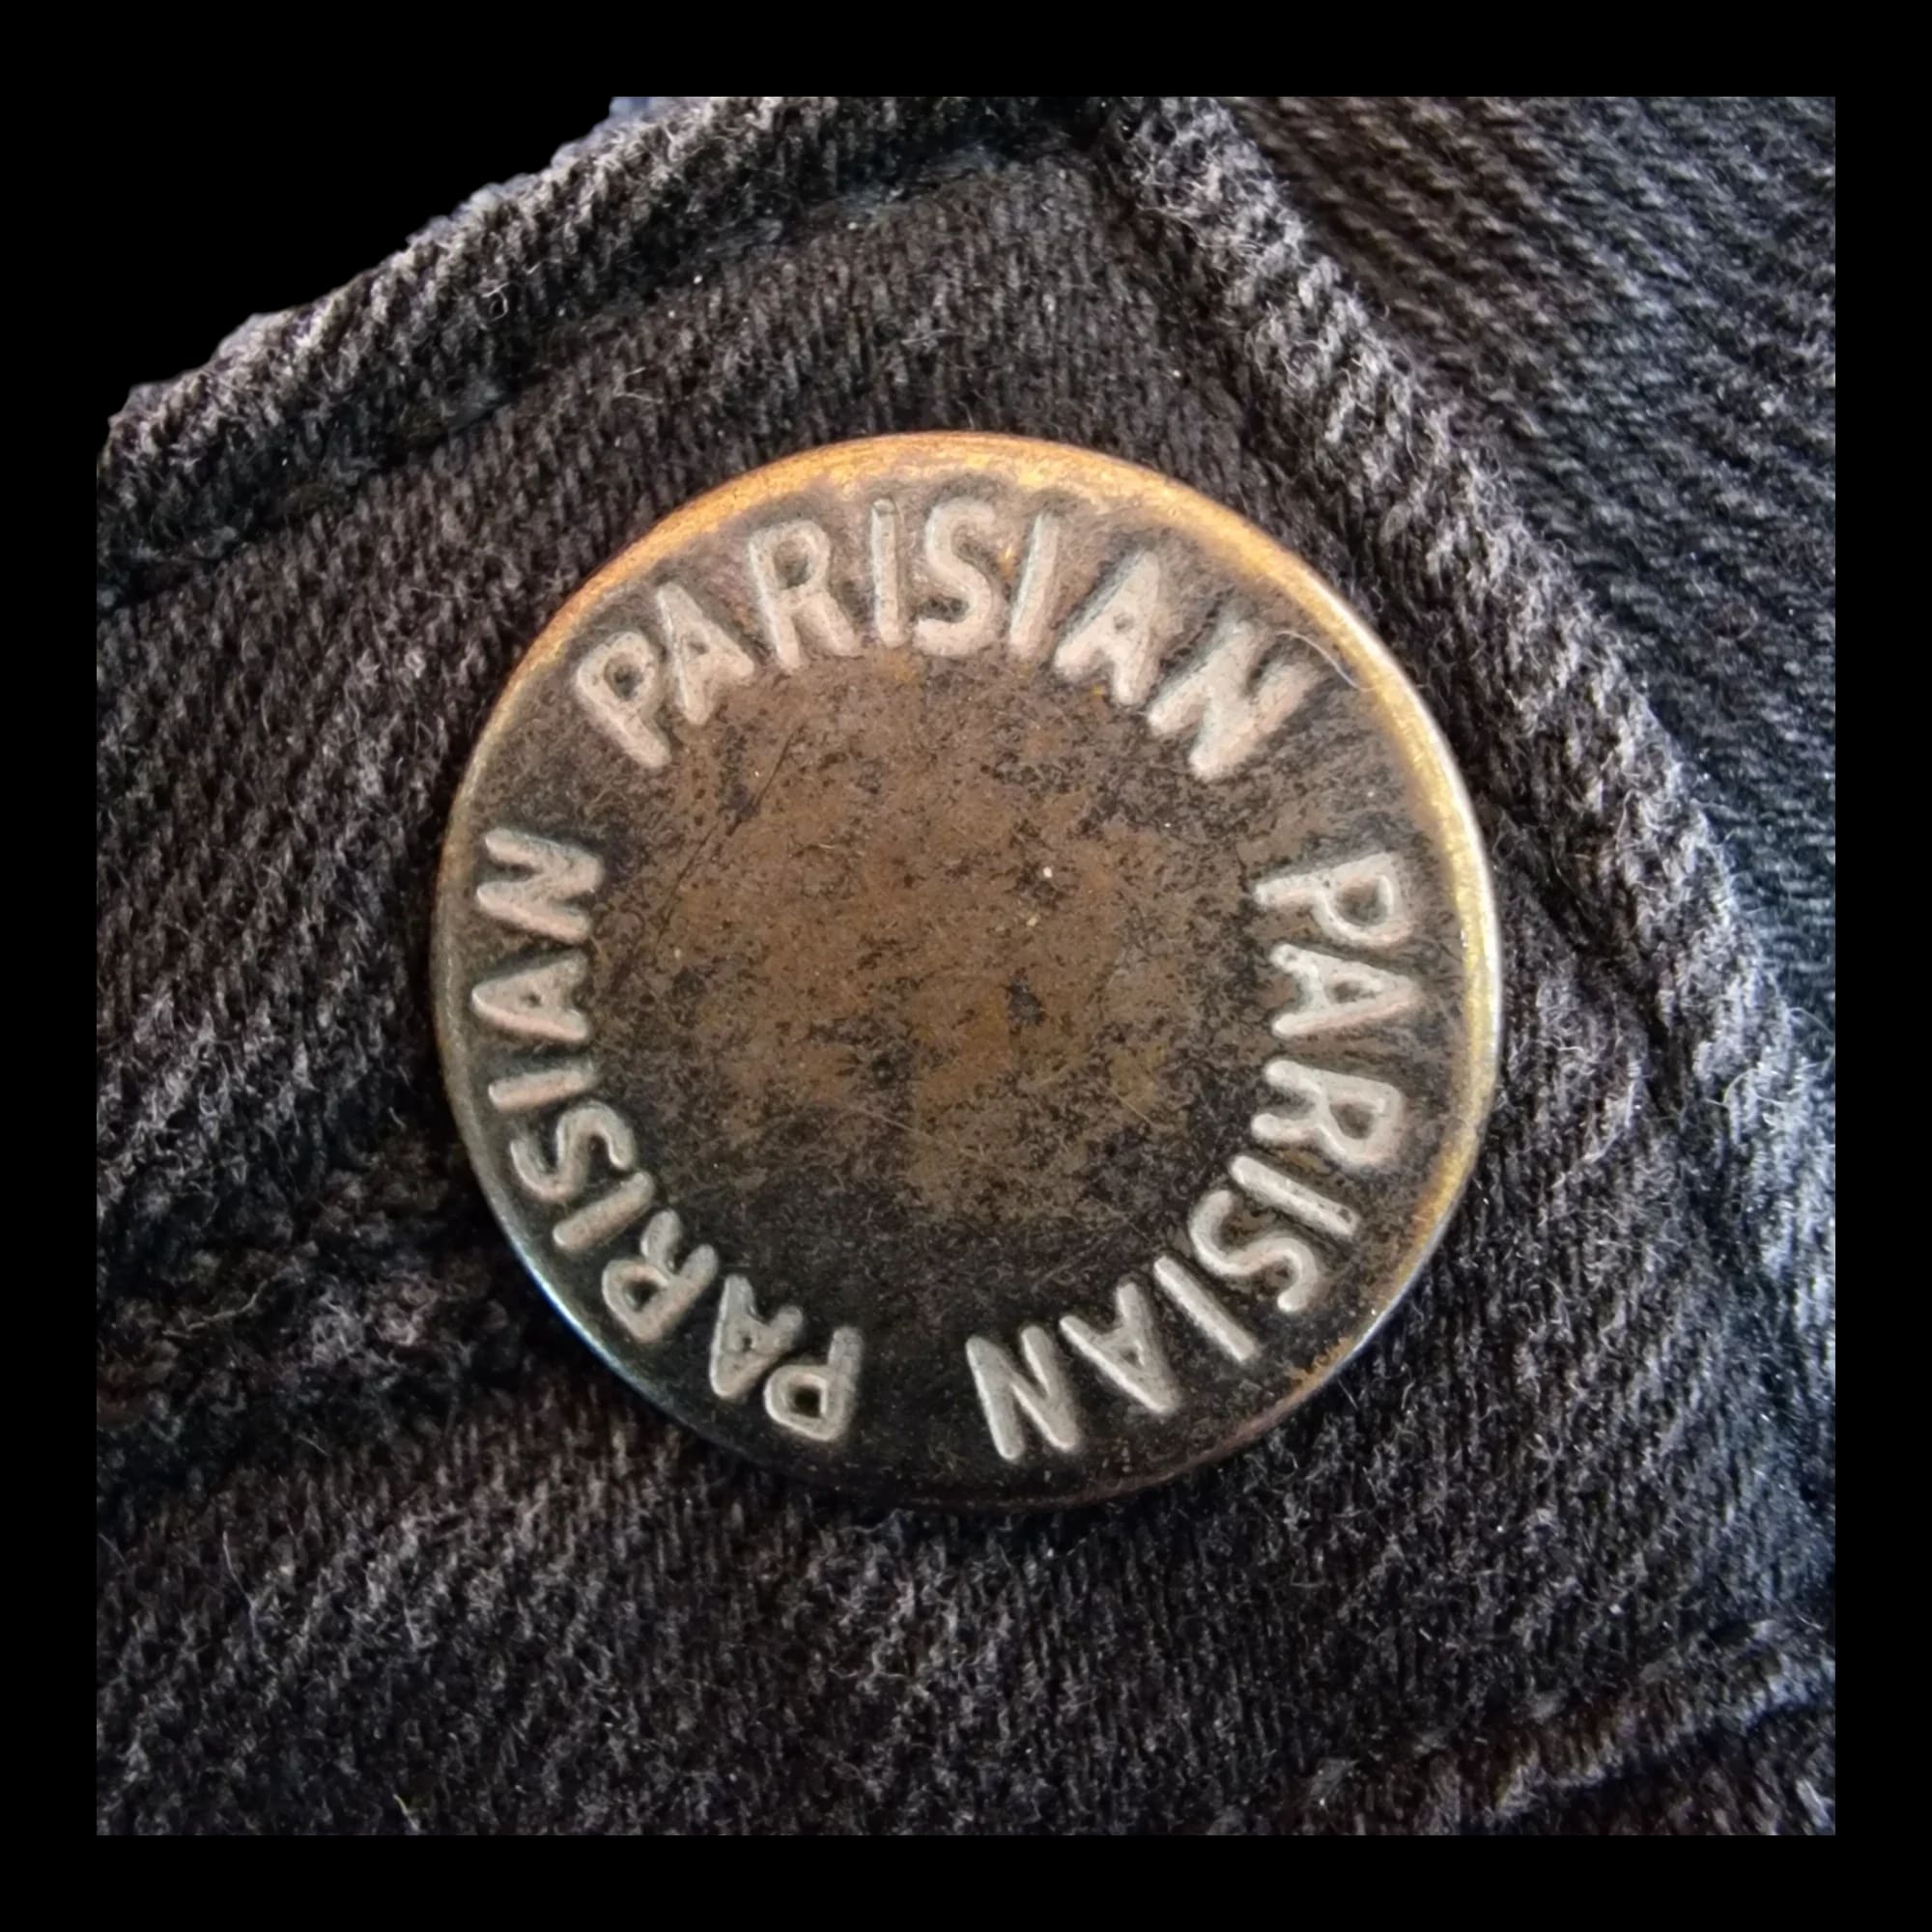 Womens Parisian Black Button Up Mini Skirt Uk 8 - Skirts